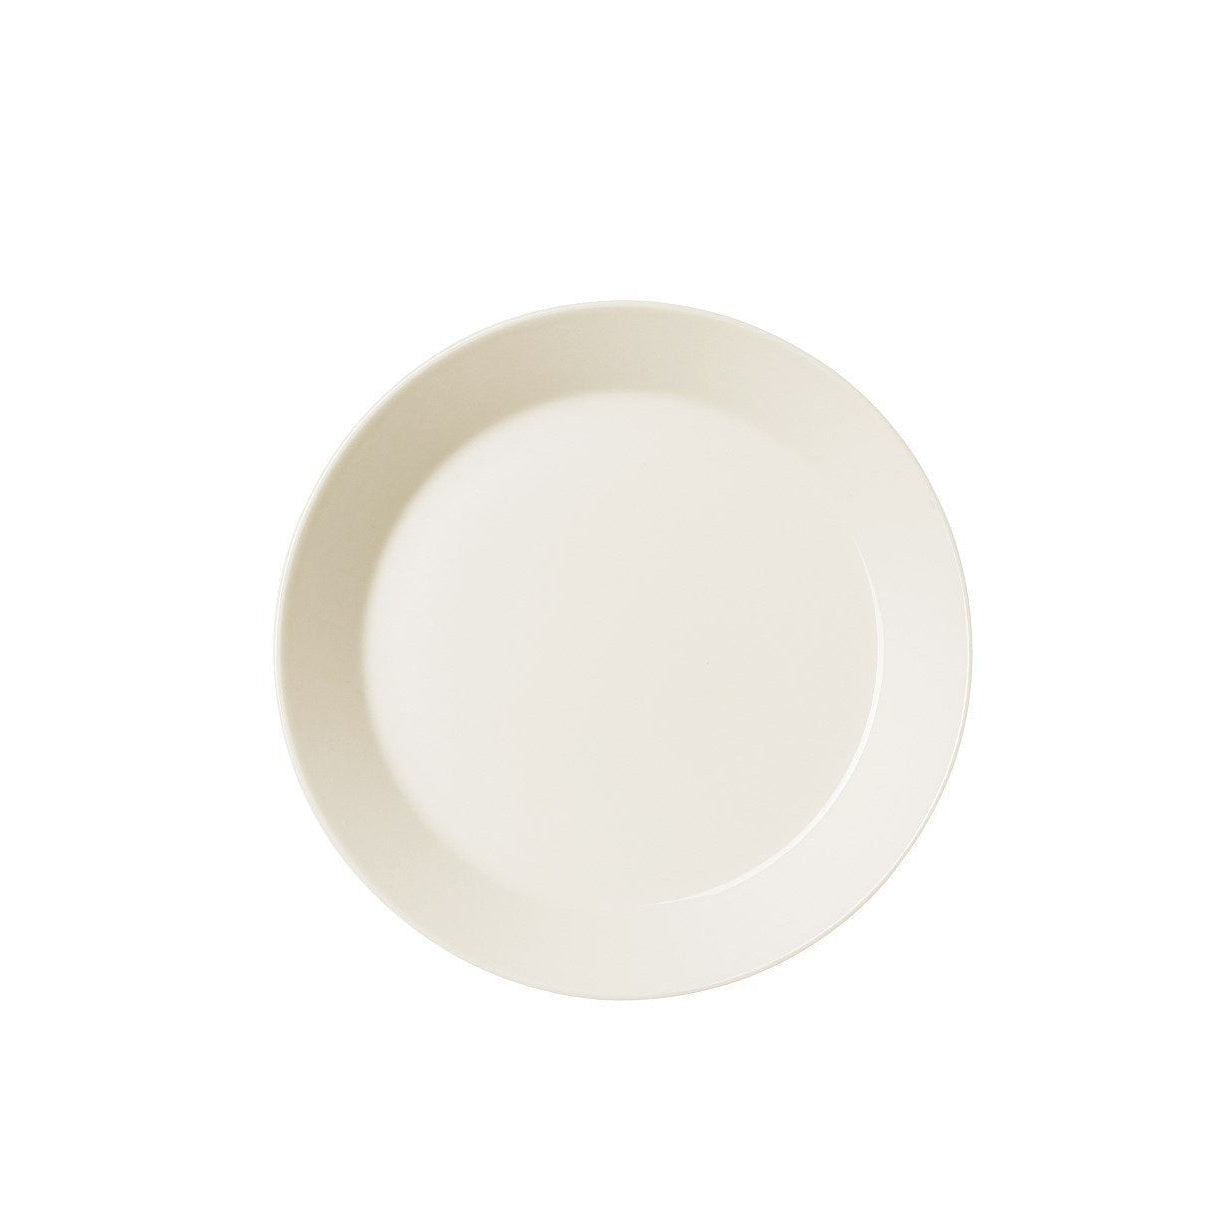 Iittala Teema Plate Flat White, 21 cm